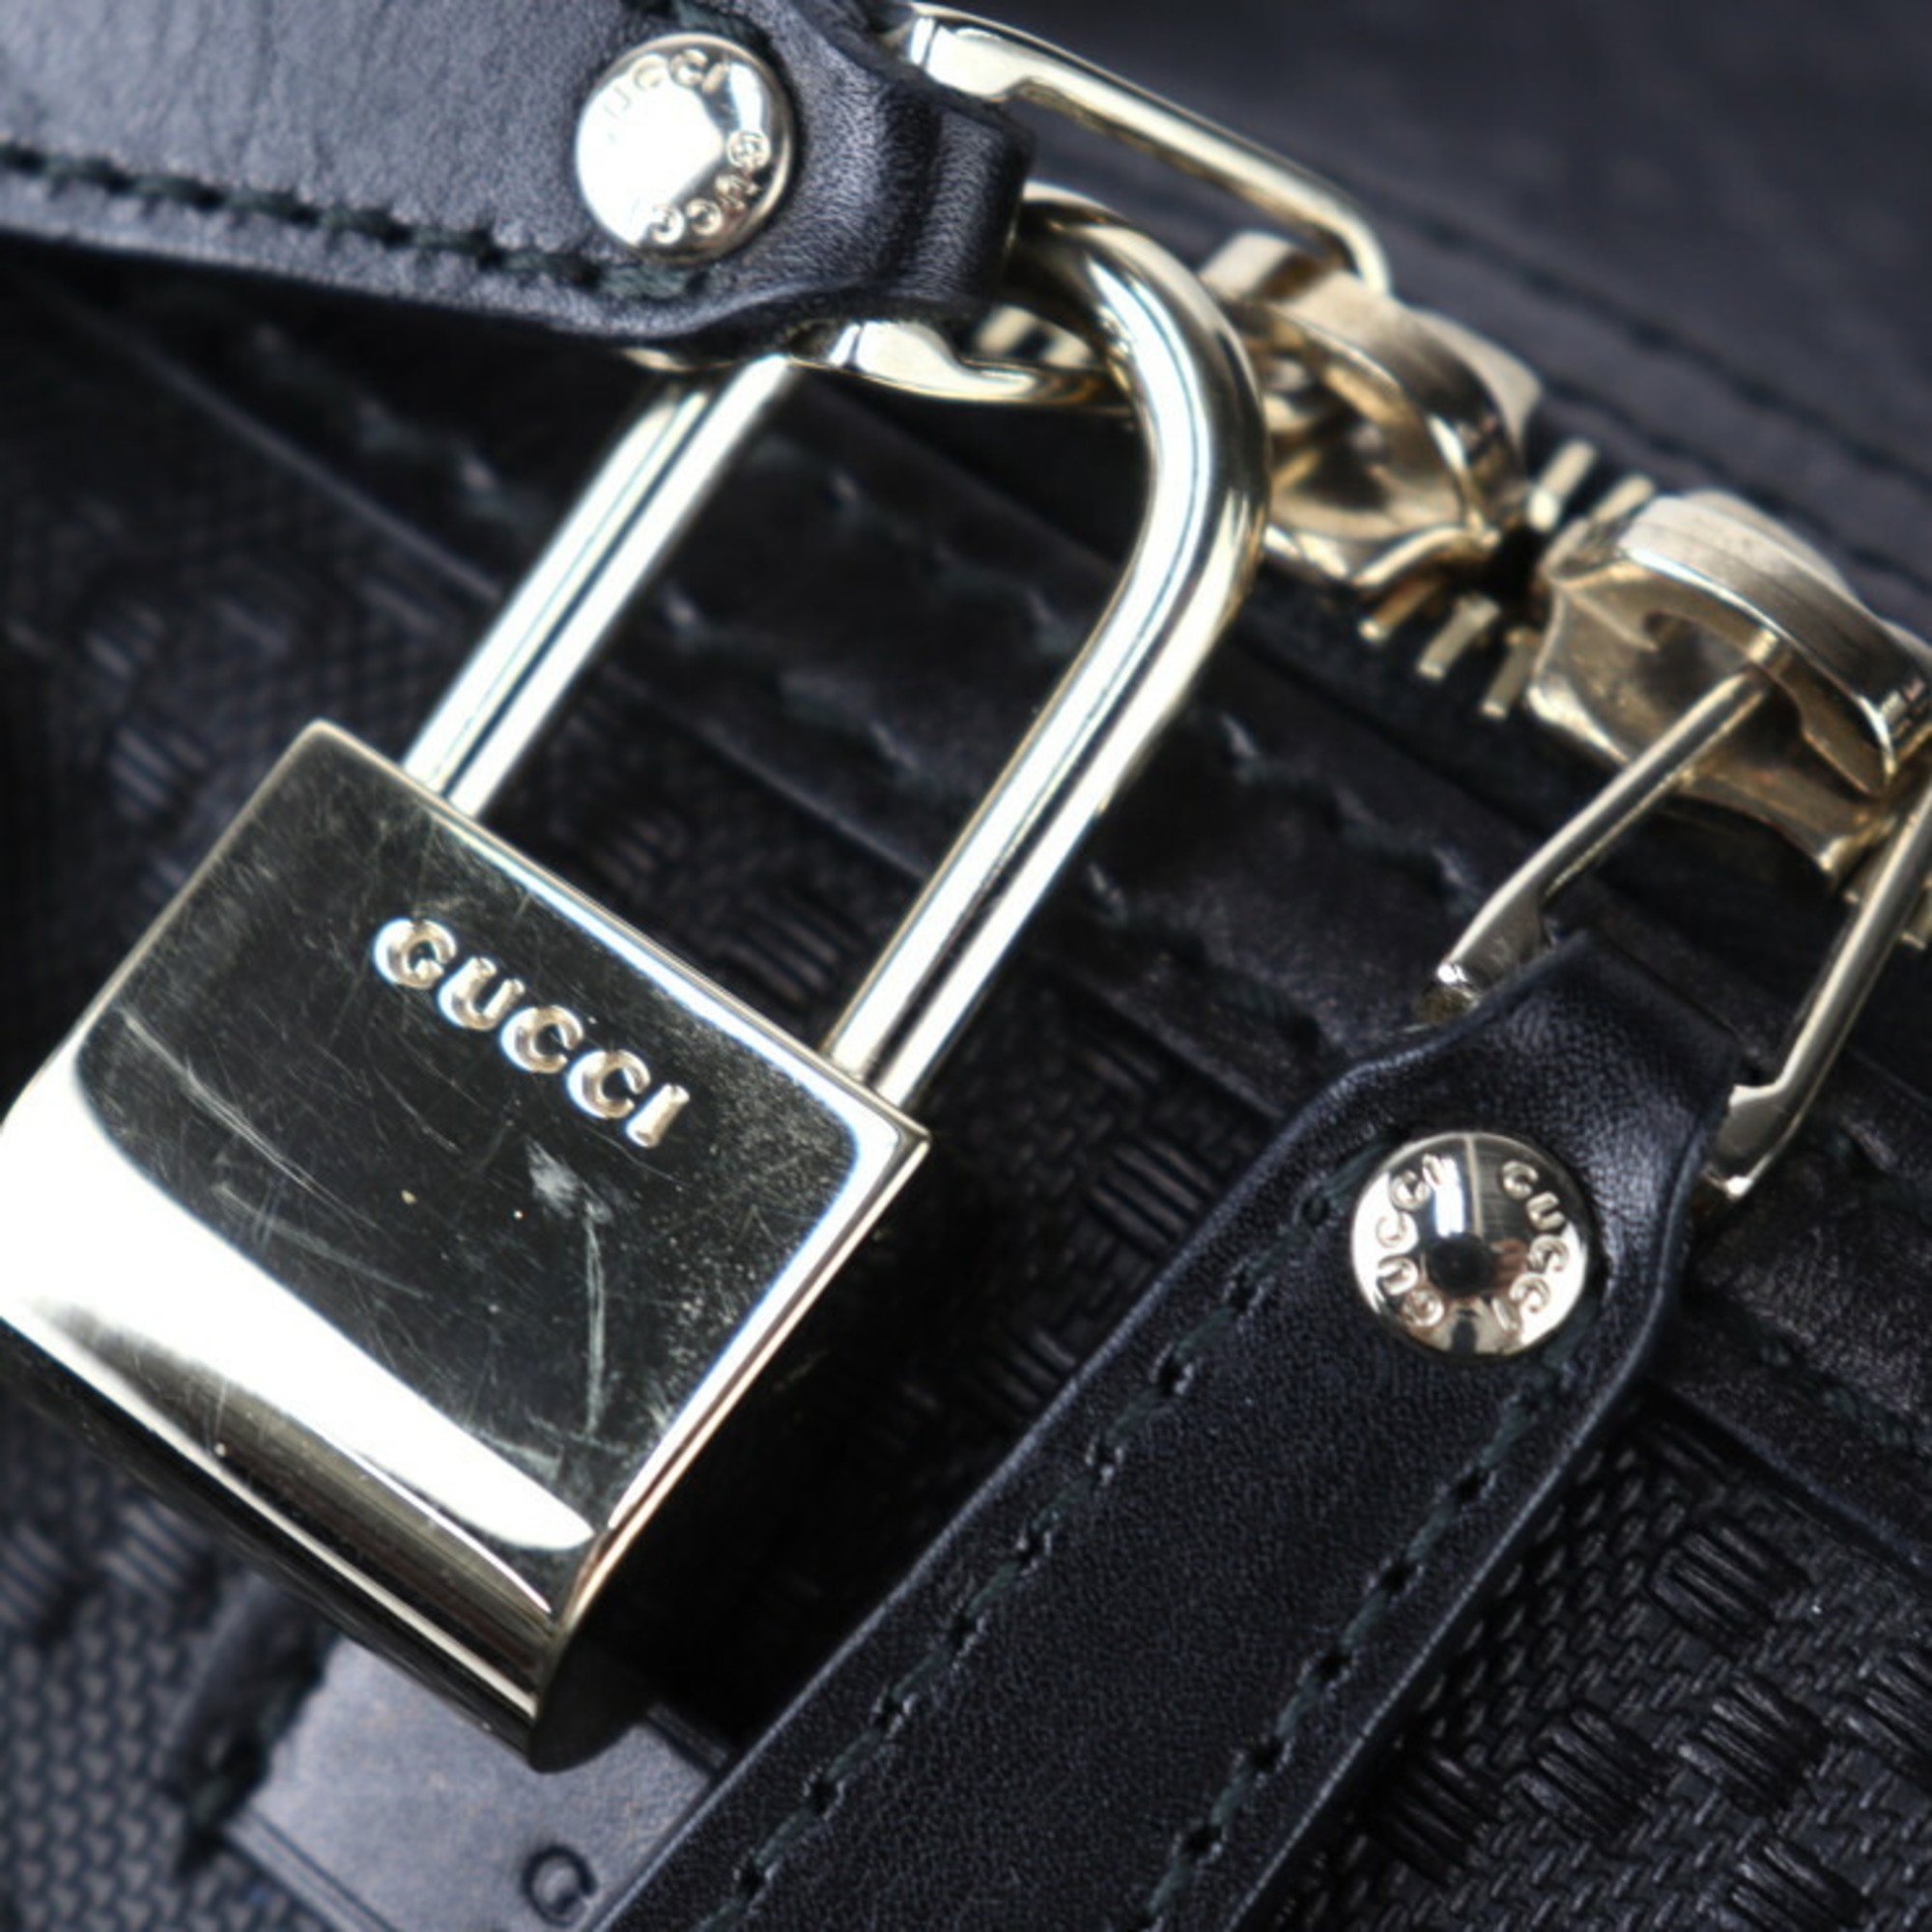 GUCCI Diamante Boston Bag 206500 Embossed Leather Black Shoulder